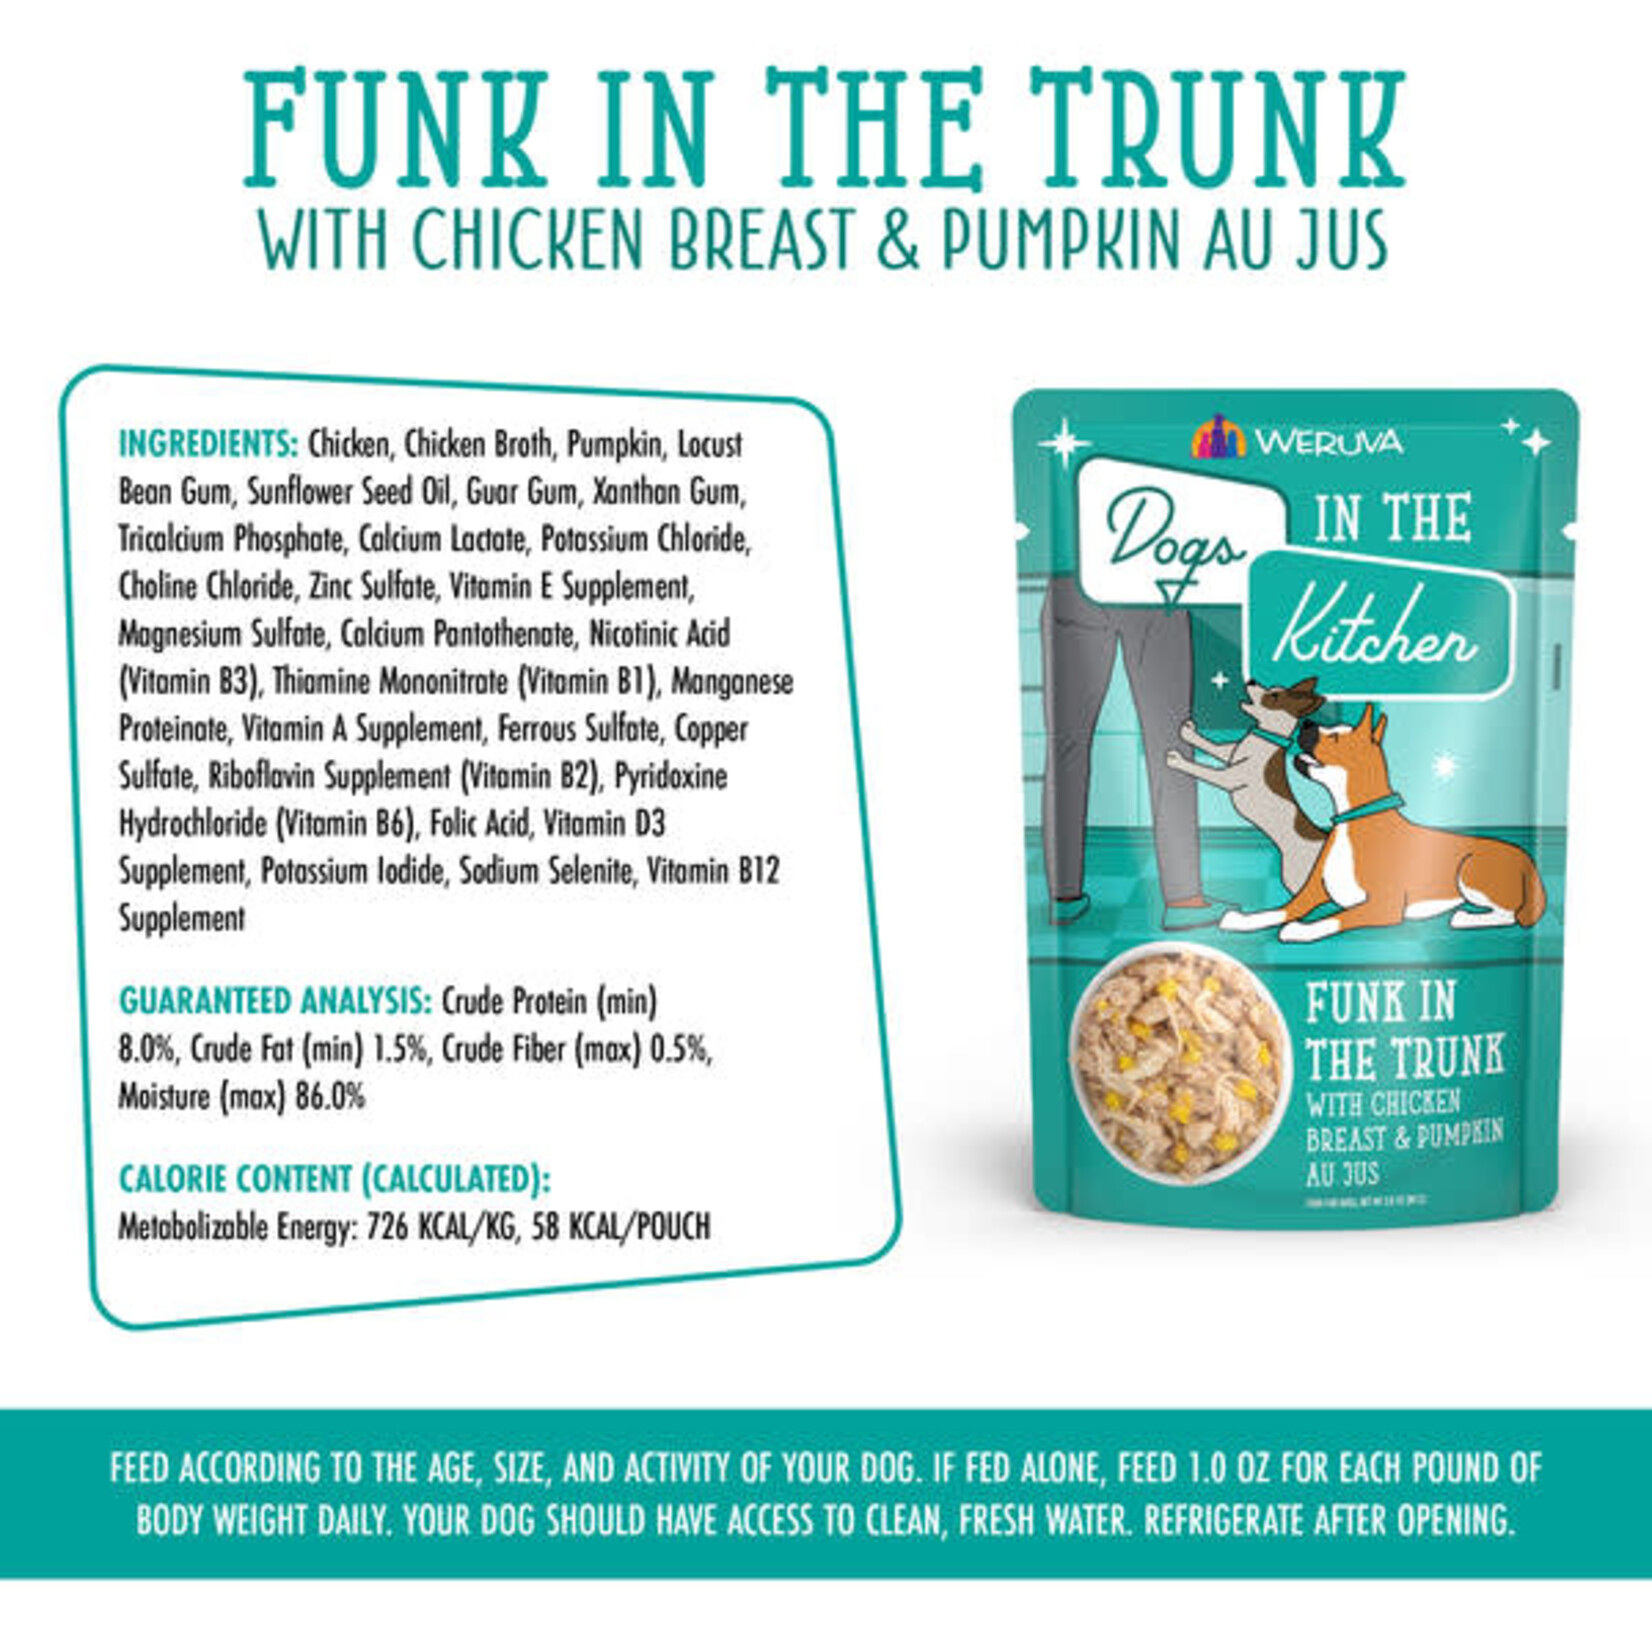 Weruva Dogs in the Kitchen - Funk in the Trunk with Chicken Breast & Pumpkin Au Jus